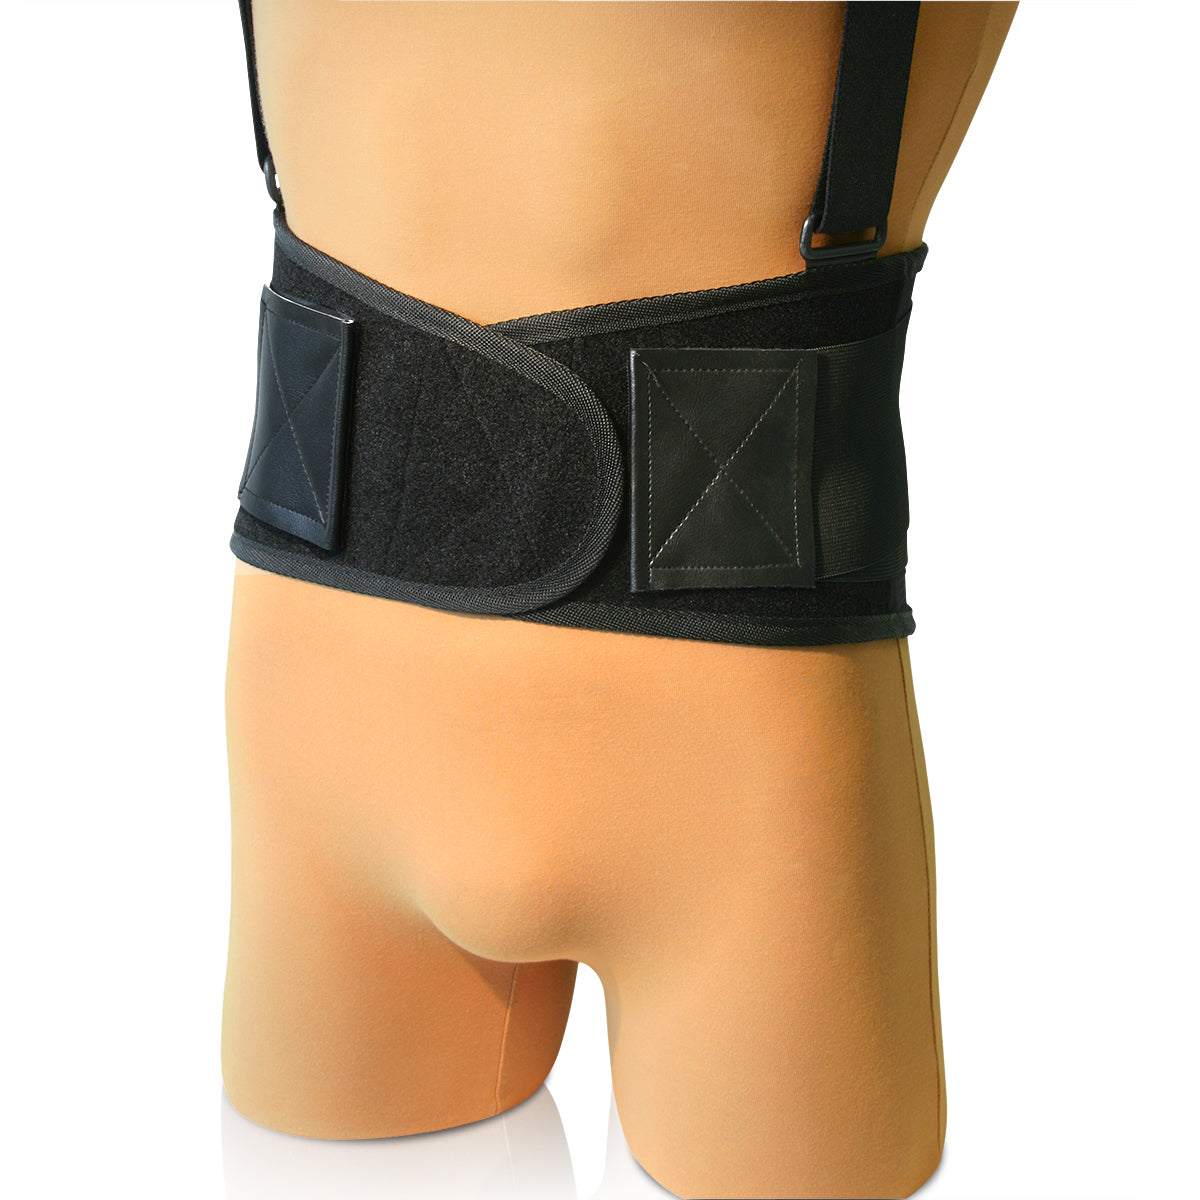 Deluxe Breathable Spandex Back Belt, Large